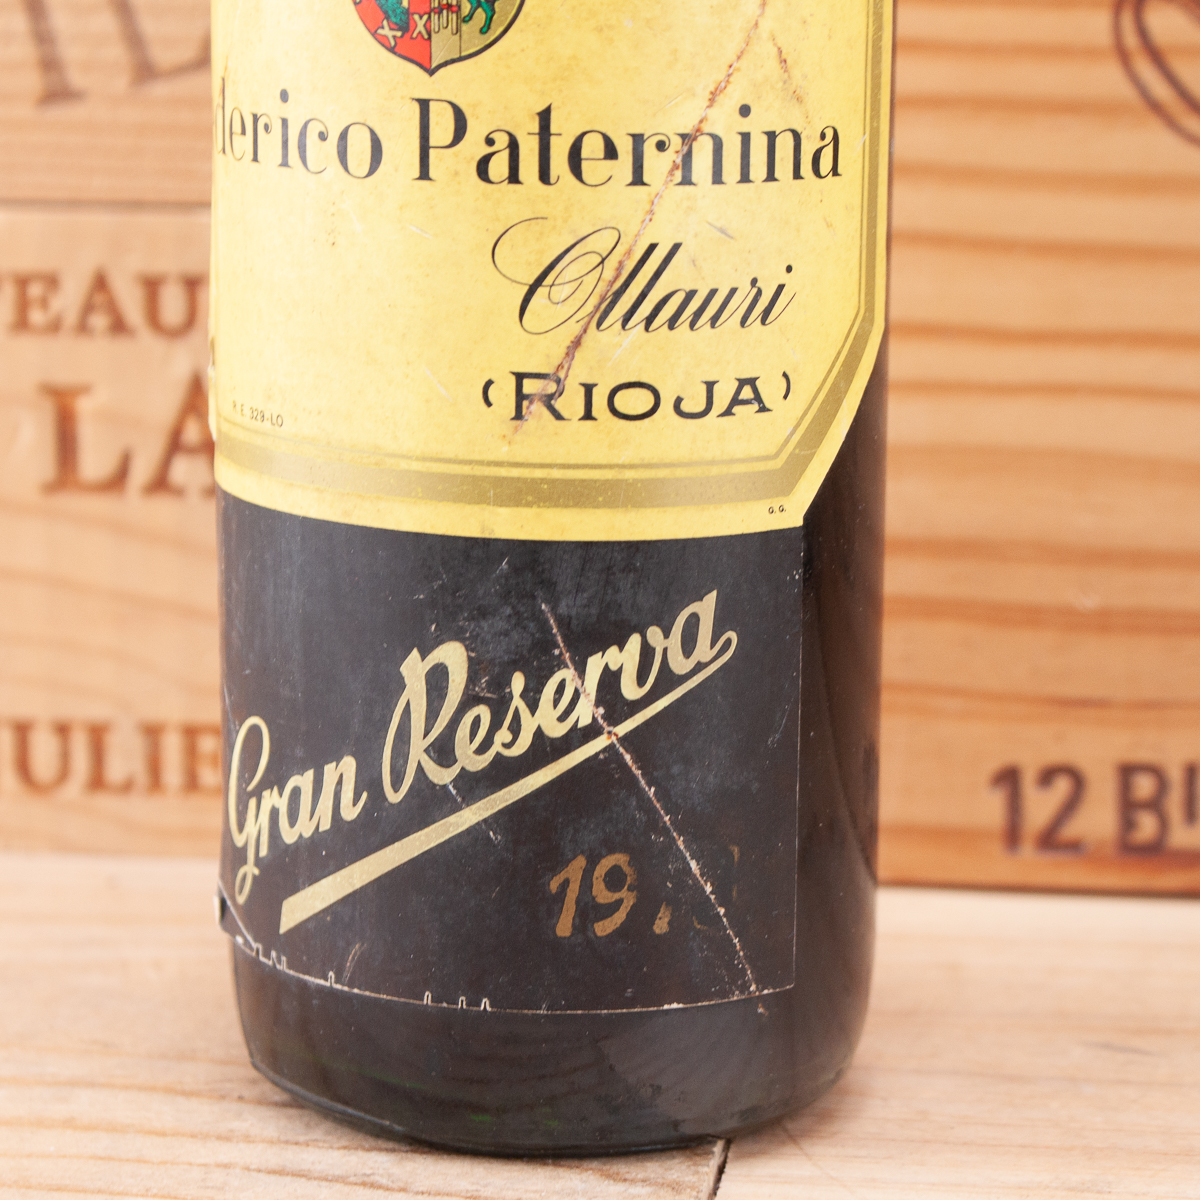 1973 Rioja Royal Paternina Gran Reserva